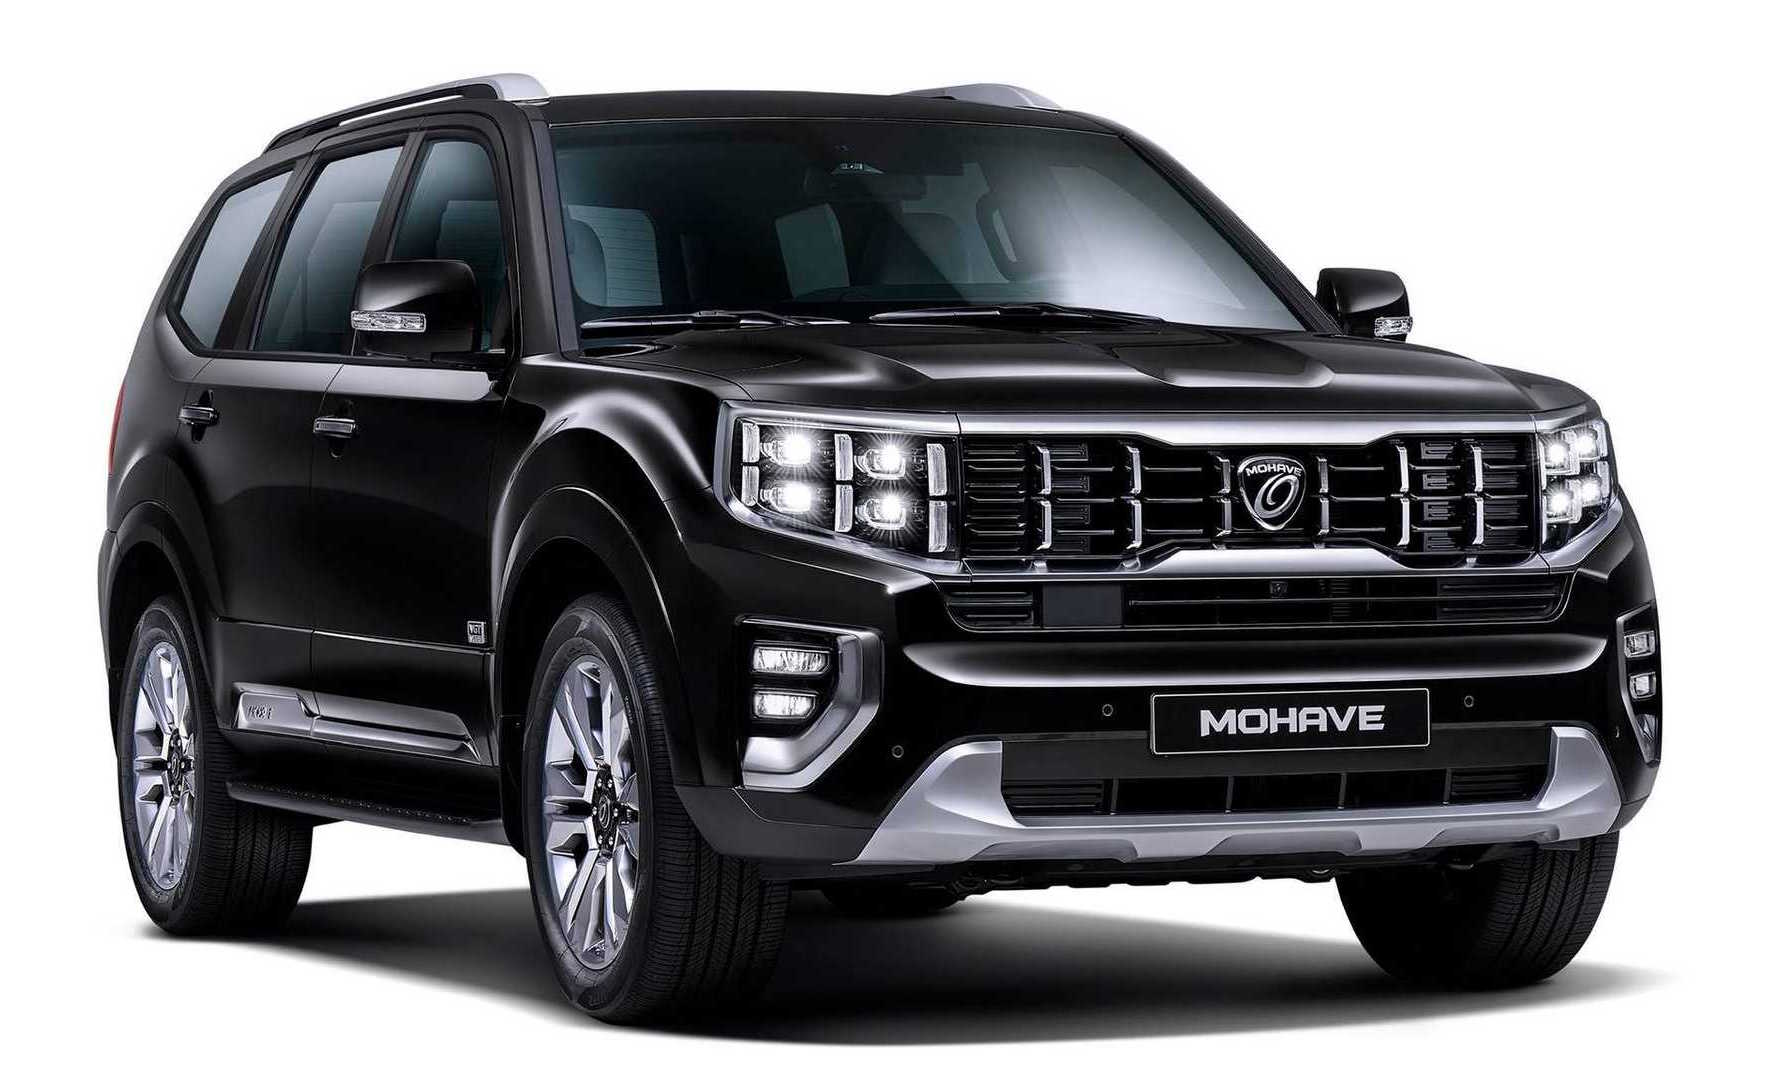 2020 Kia Mohave large SUV revealed for Korea